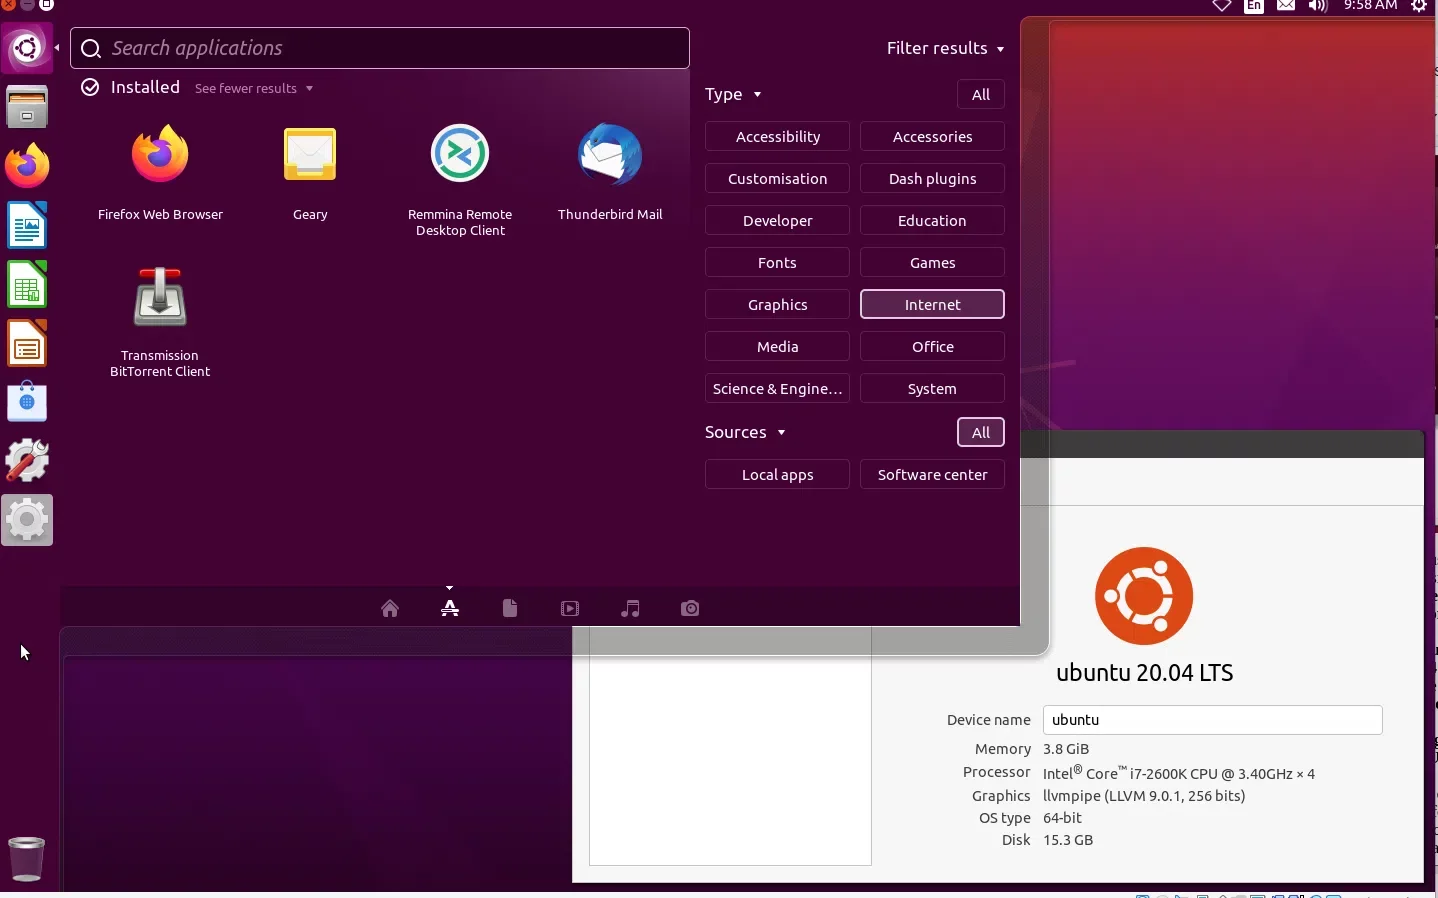 Unity Ubuntu 20.04 Focal Fossa